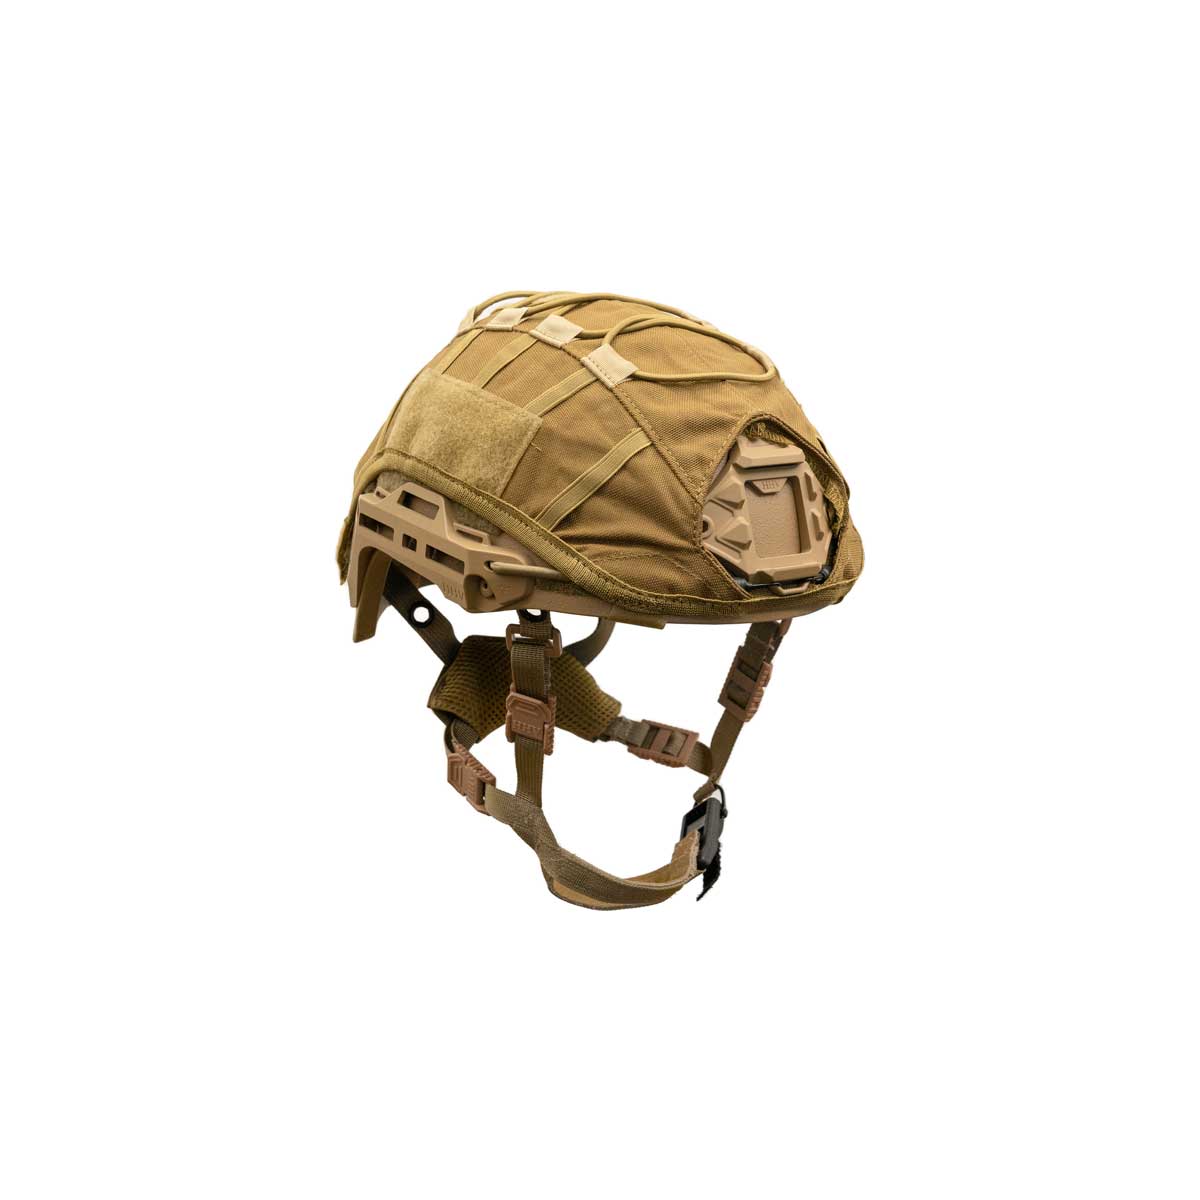 Tan helmet cover